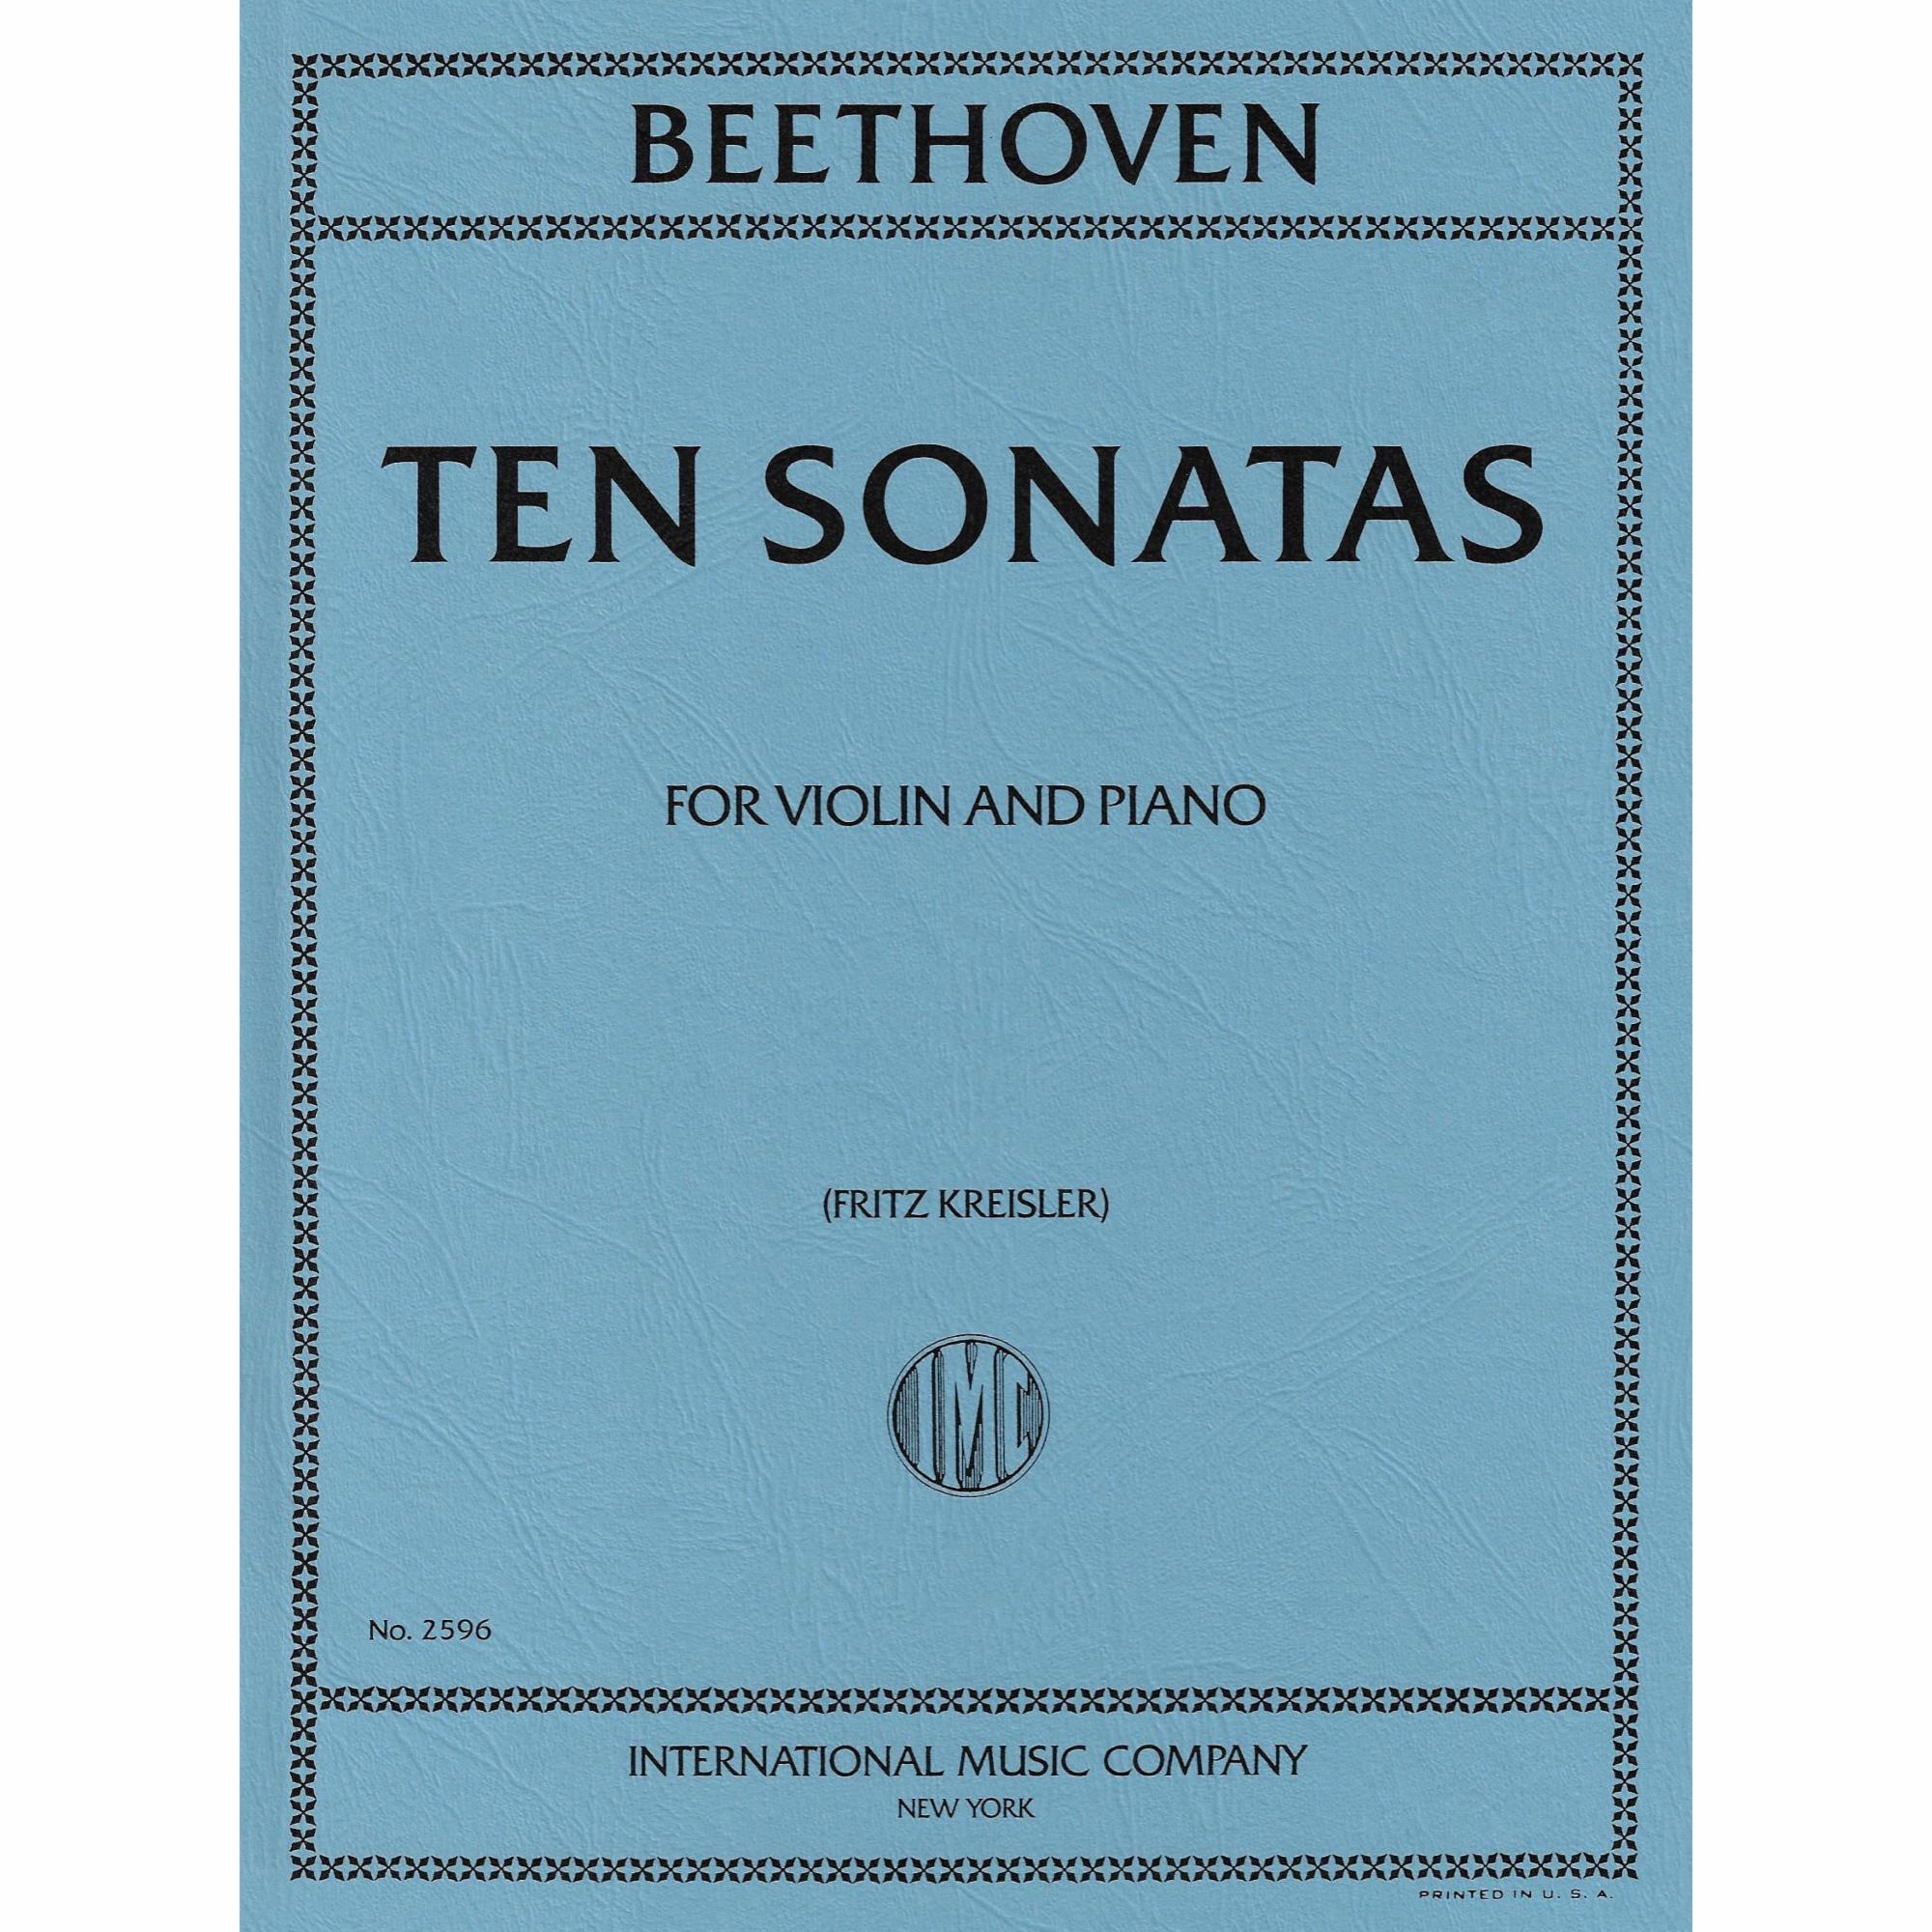 Beethoven -- Ten Sonatas for Violin and Piano